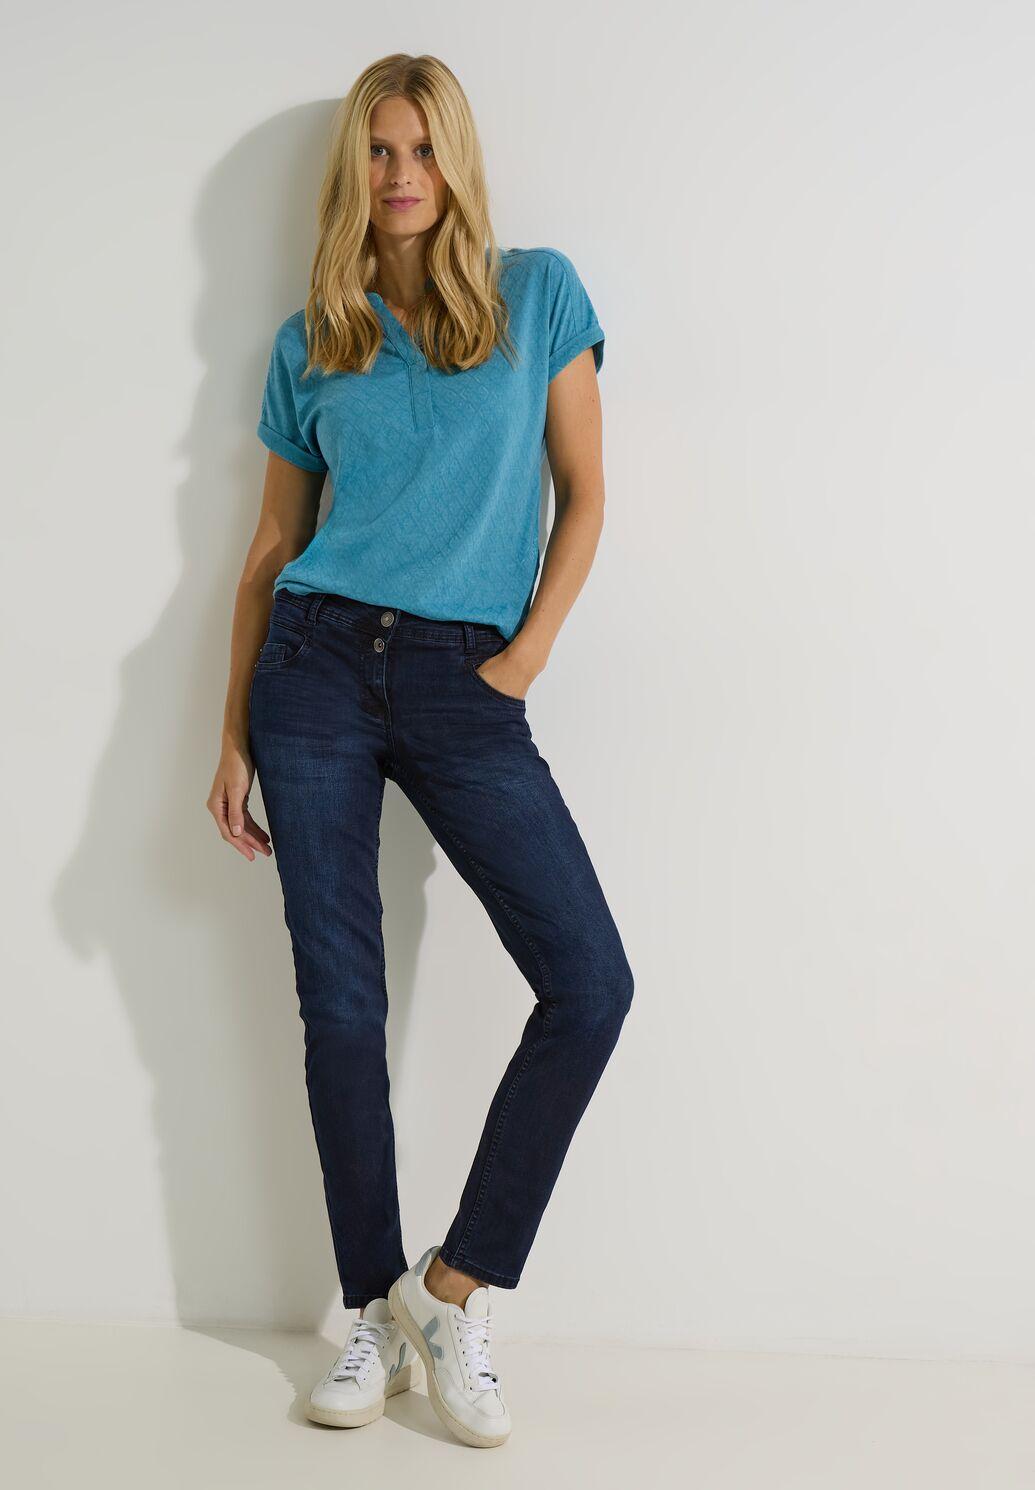 ✓ CECIL - Jeans Hose im Style SCARLETT dunkelblau B376508-13555